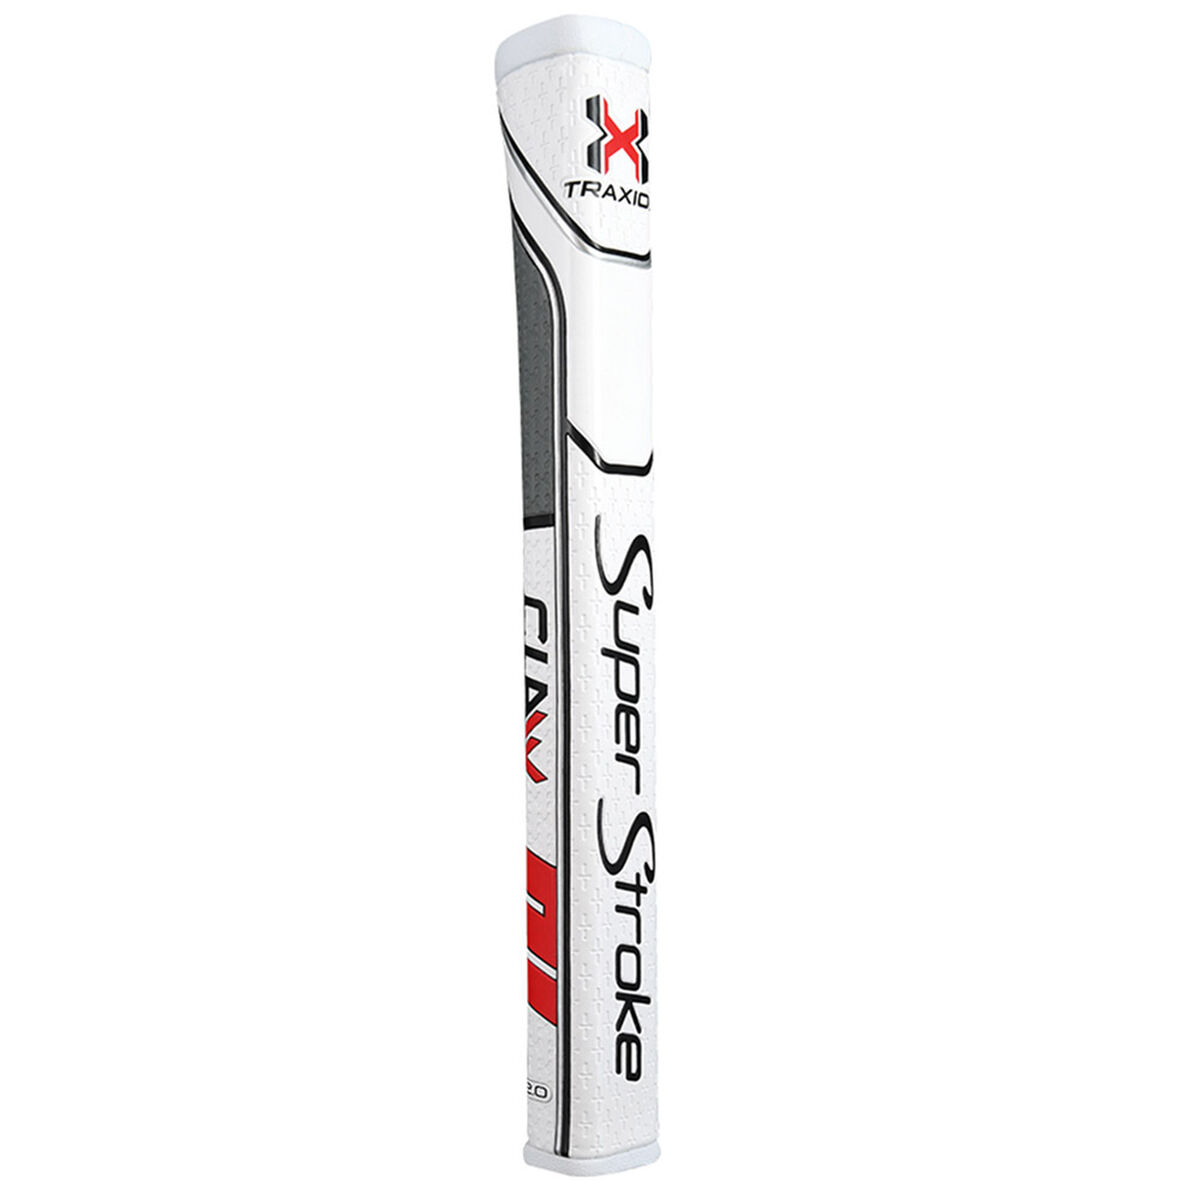 Poignée de Golf Putter SuperStroke Traxion Claw 1.0, homme, White/red/grey | Online Golf